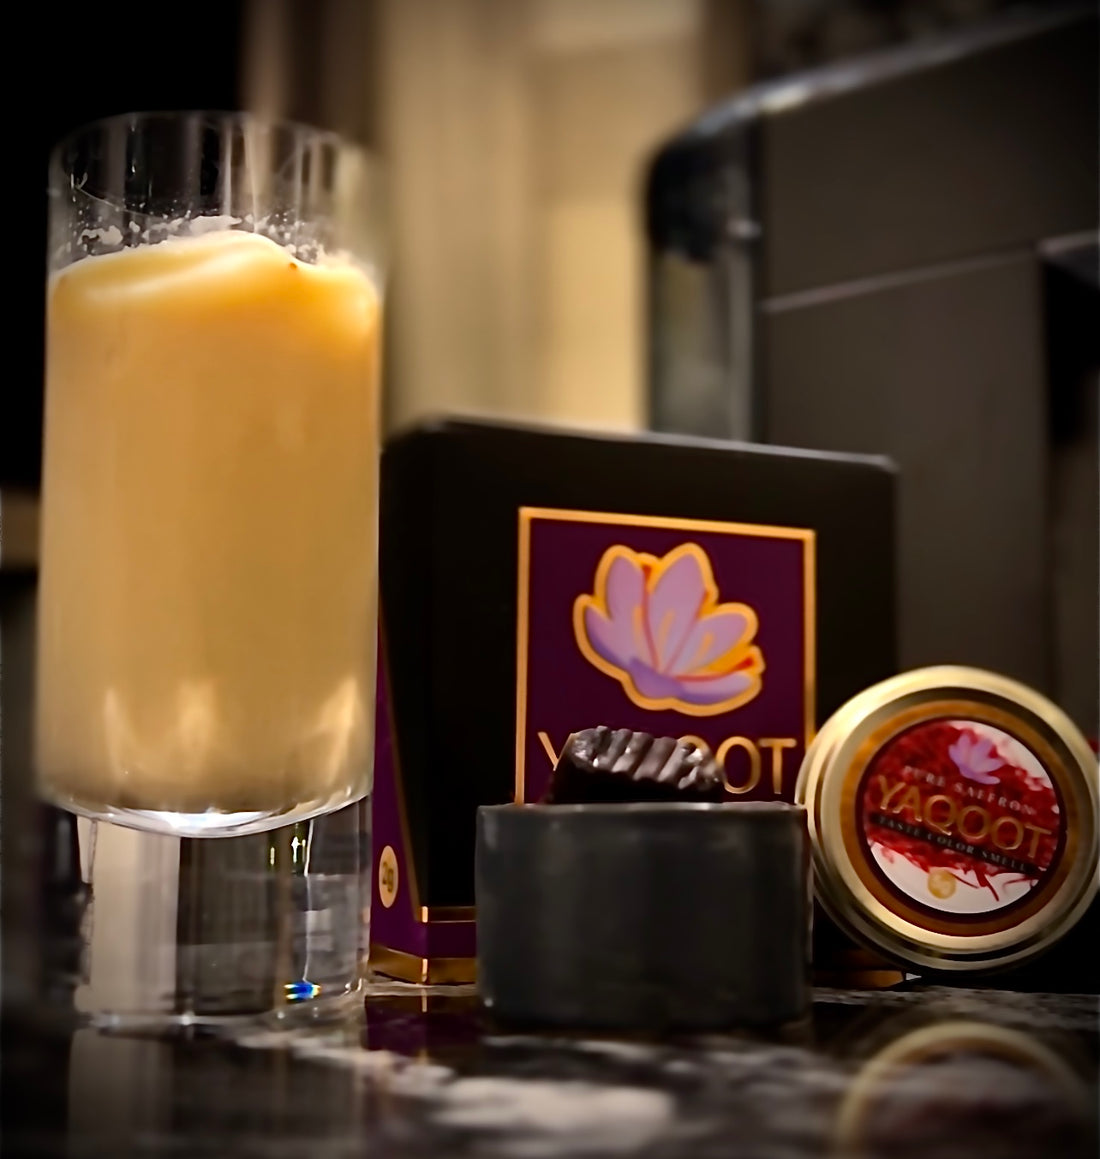 Yaqoot saffron iced latte